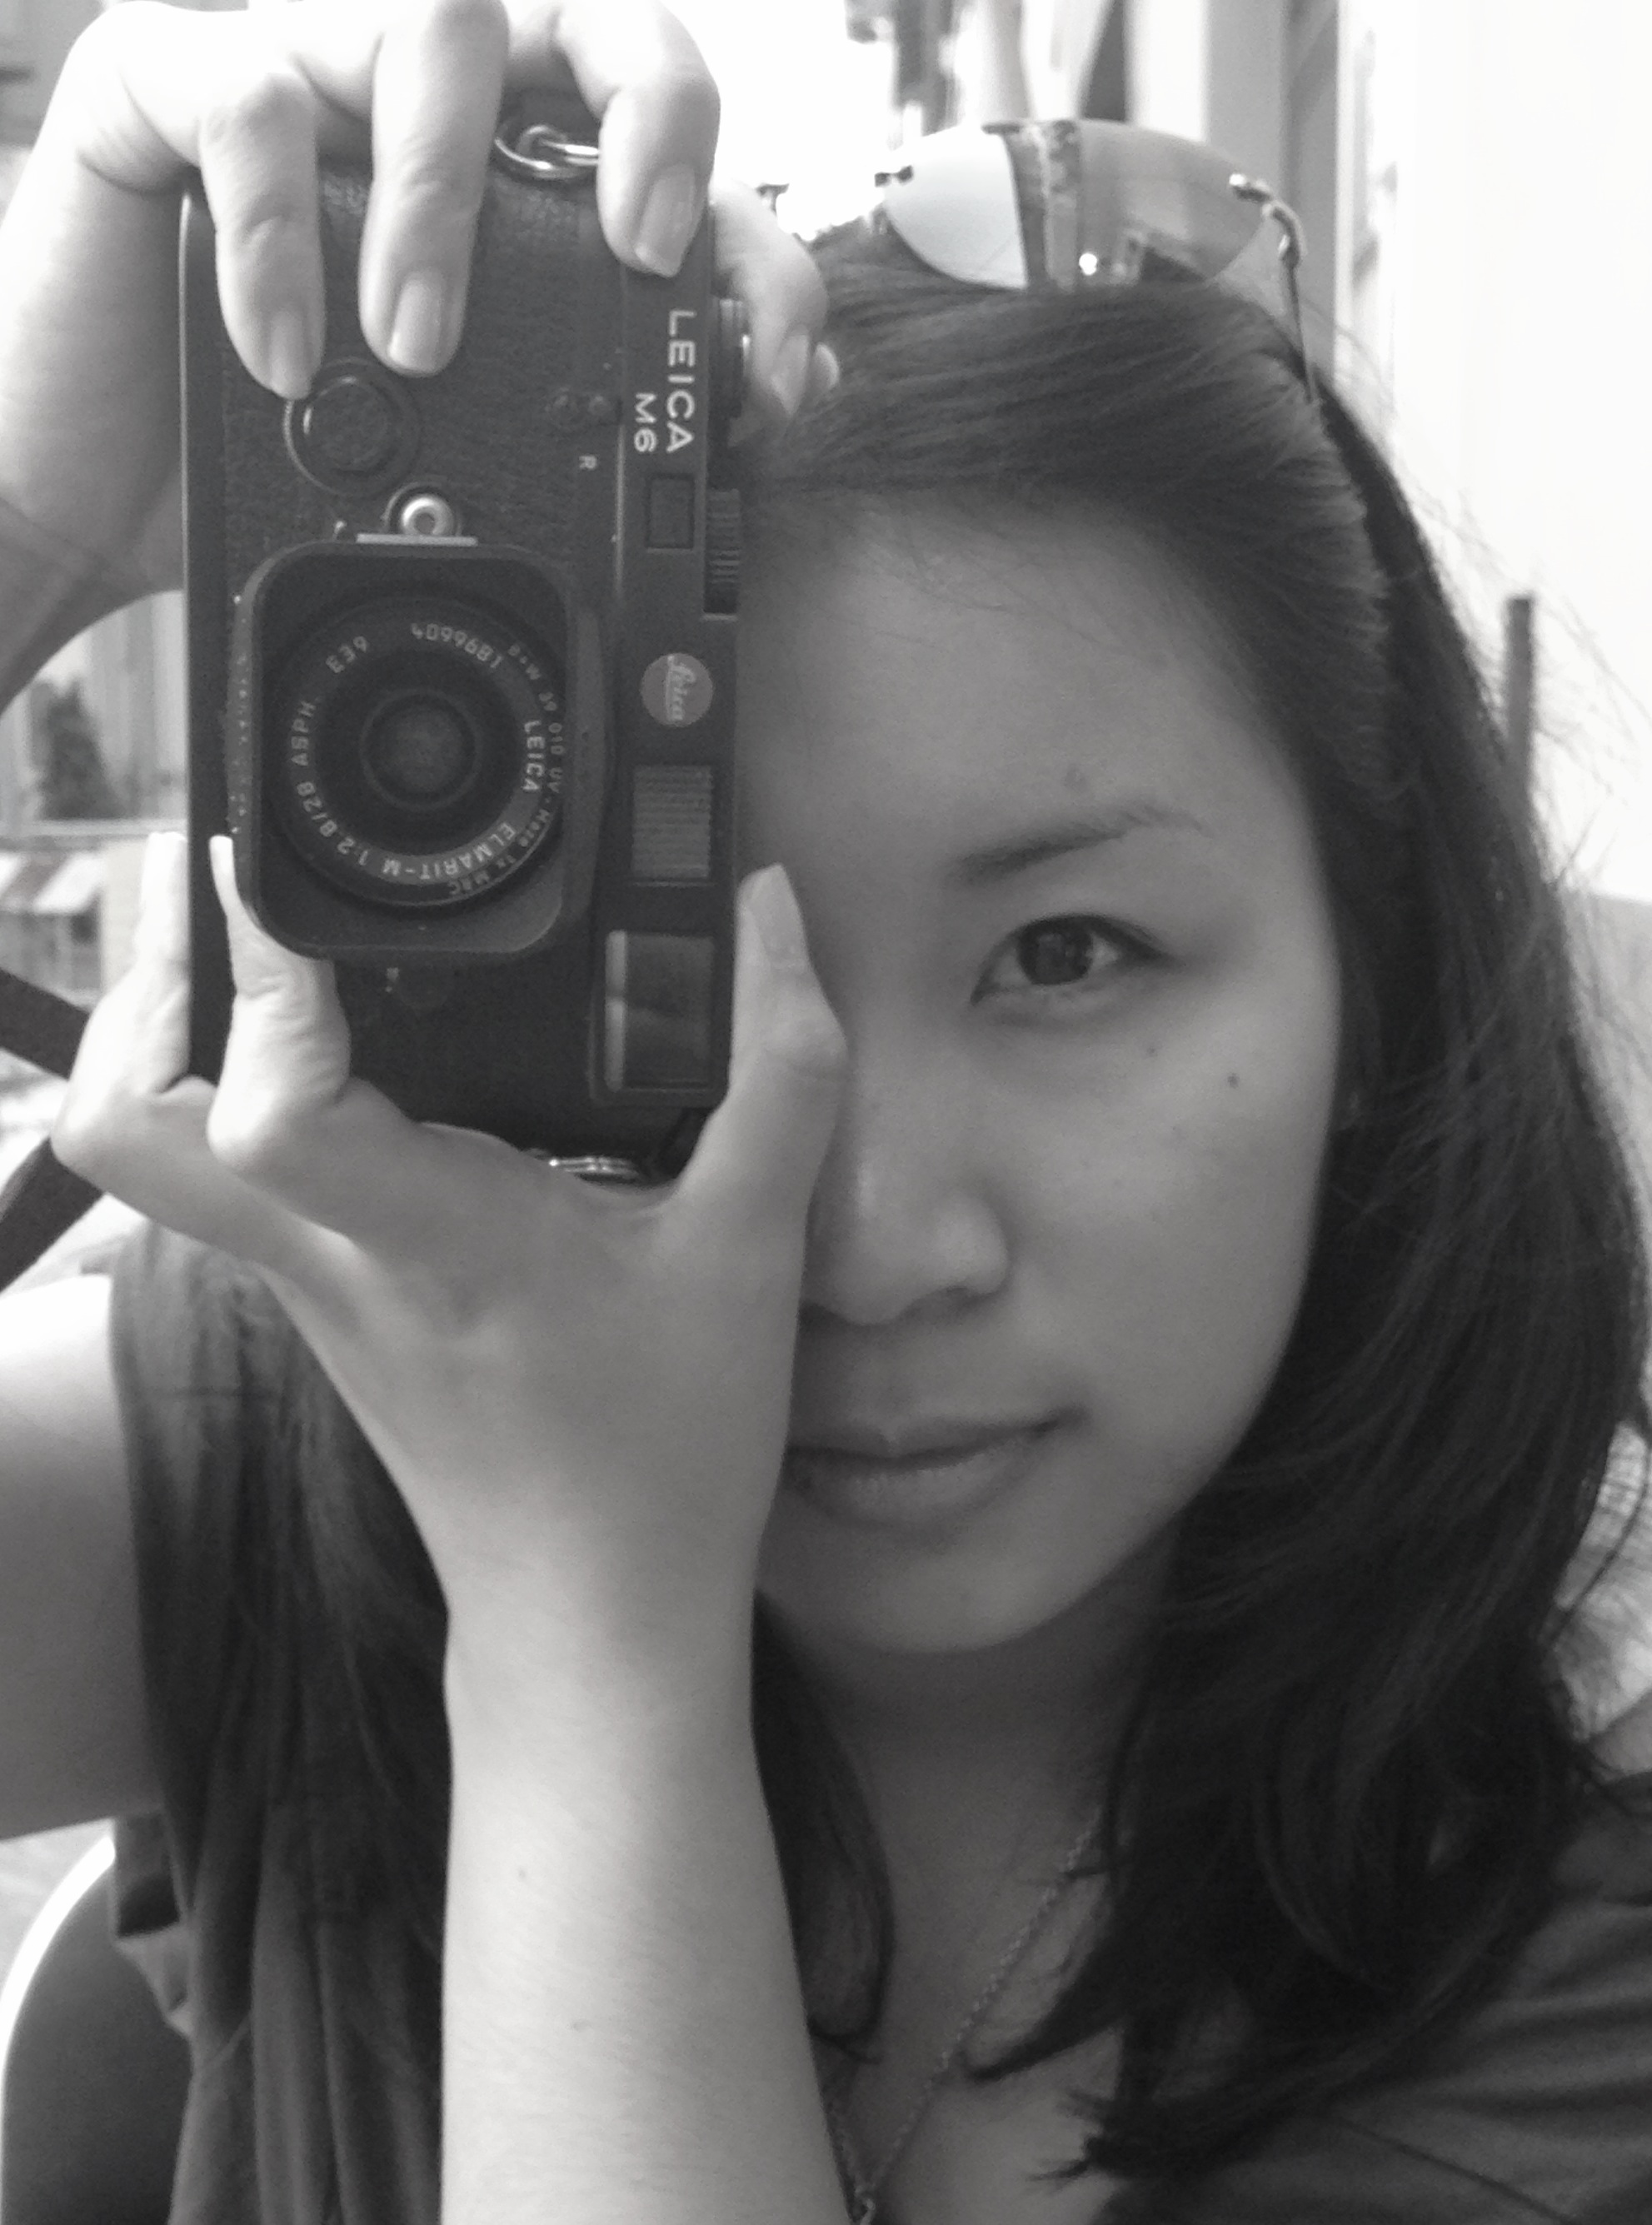 Nuda Thamkongka with her Leica M6